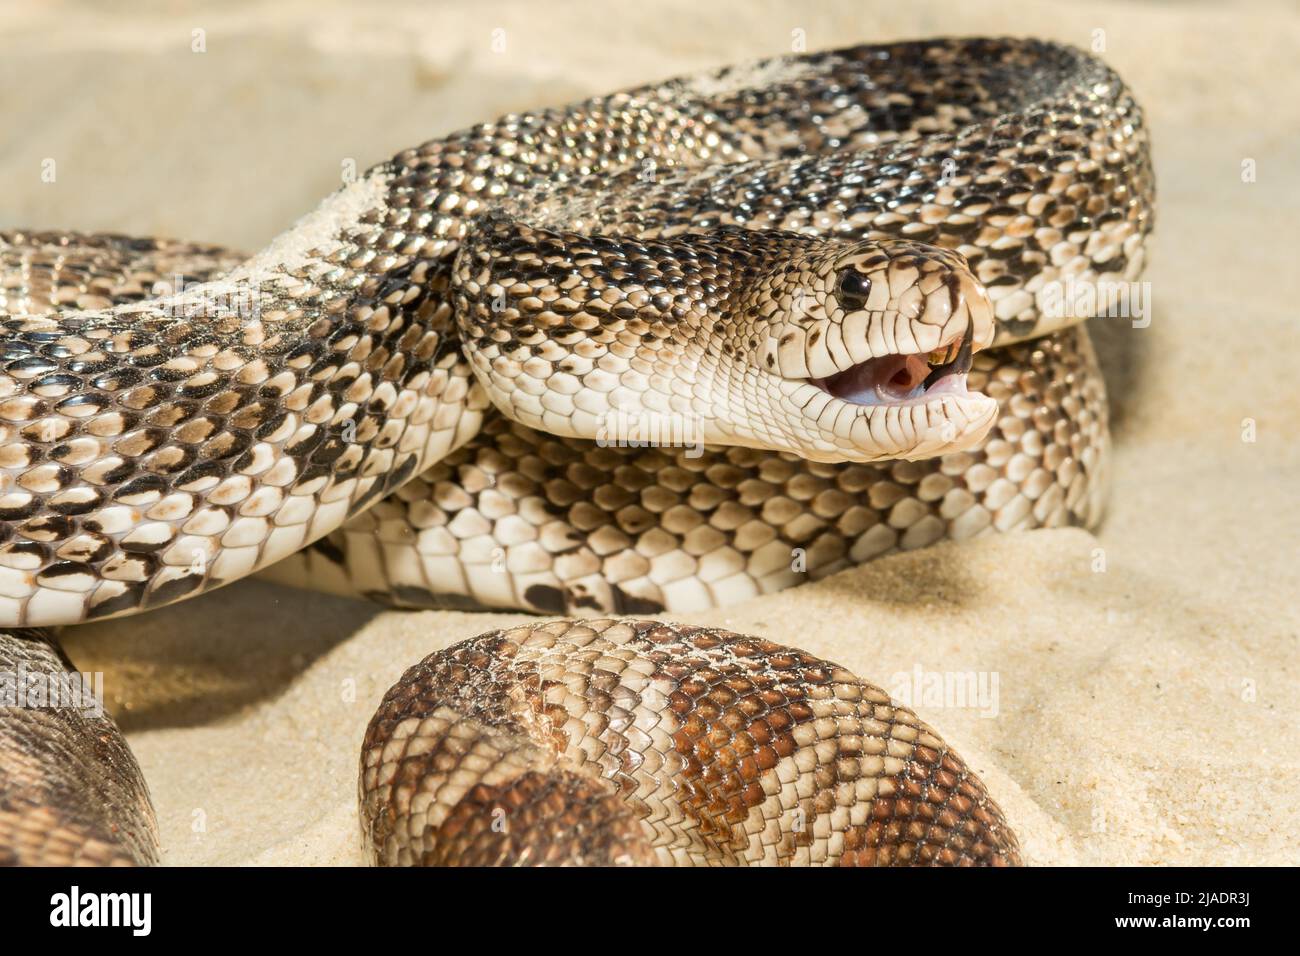 Serpiente de Pino de Florida - Pituophis melanoleucus mugitus Foto de stock